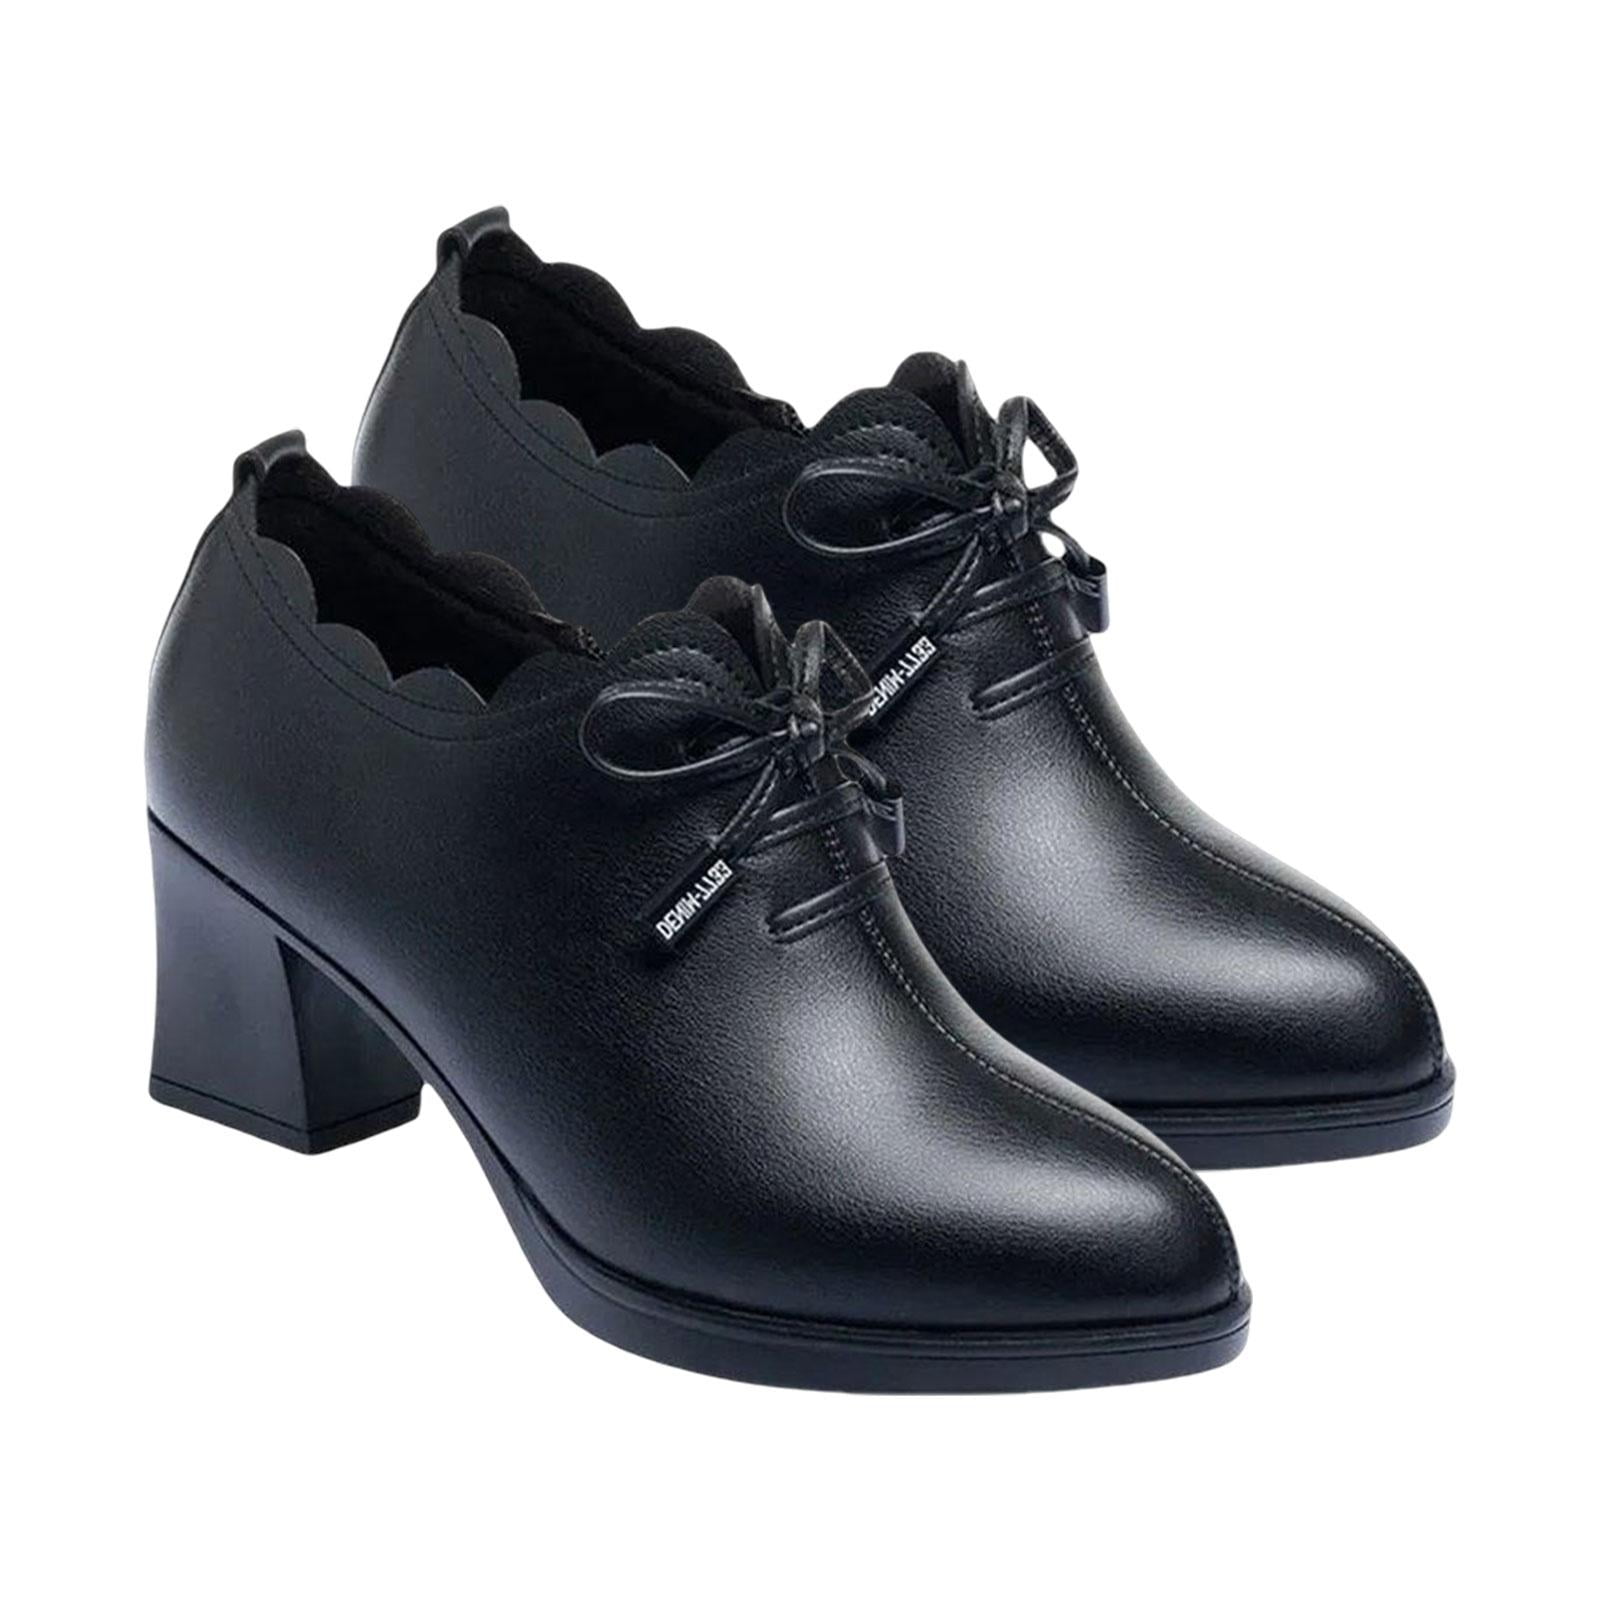 womens black dress shoes low heel